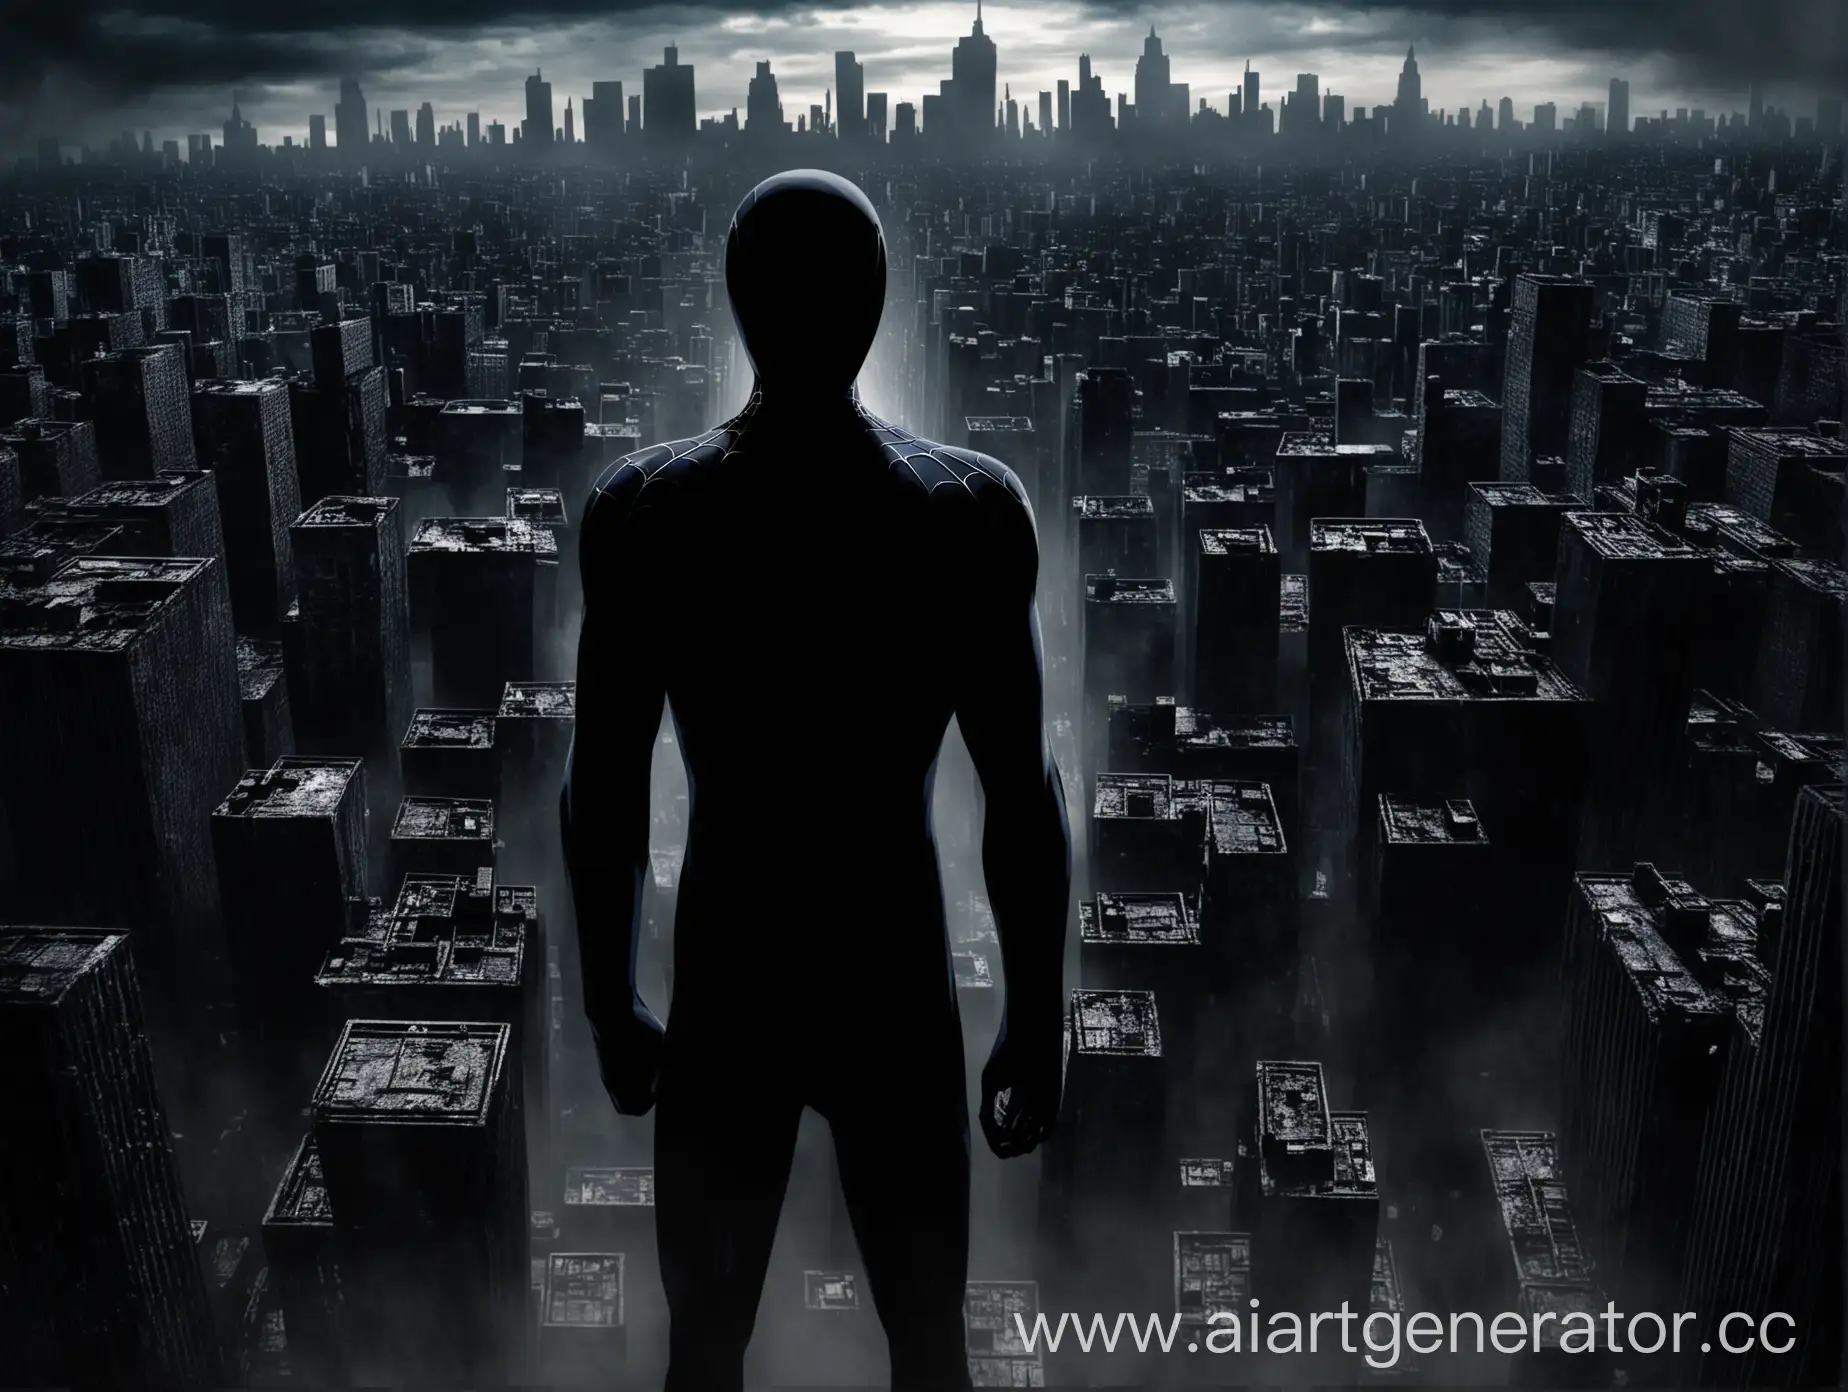 SpiderMan-in-Black-Suit-Against-Grim-Dark-City-Backdrop